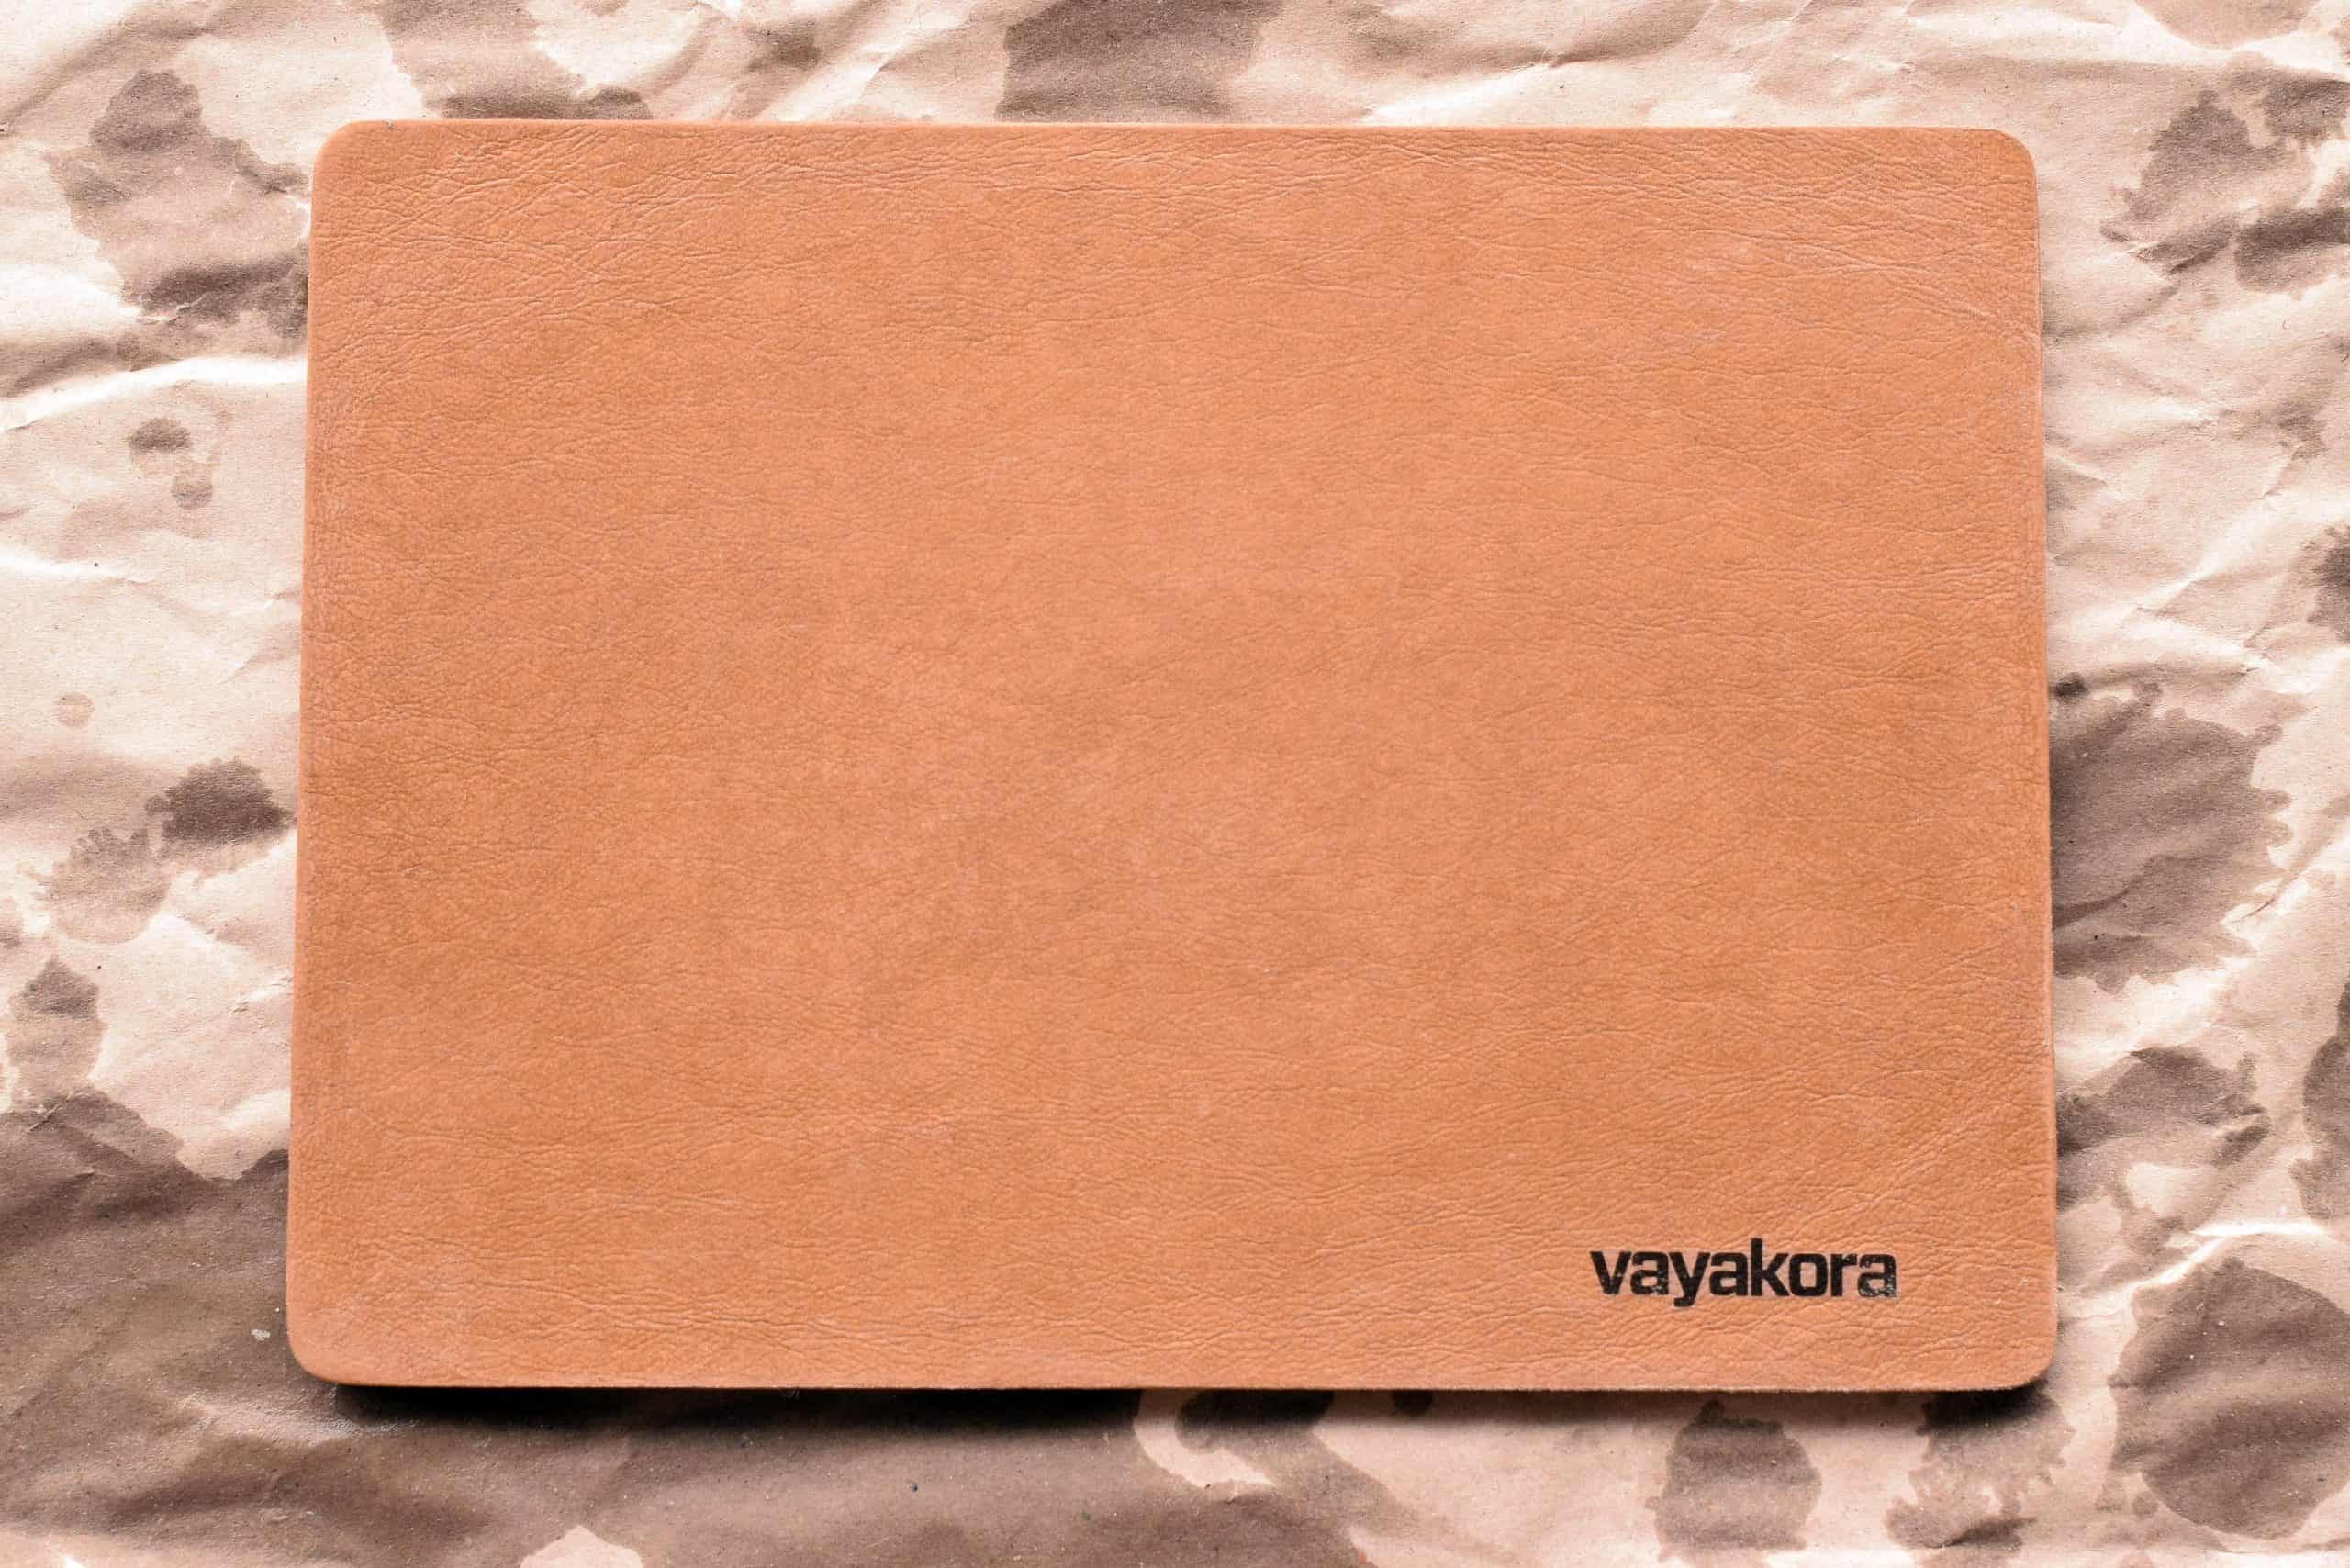 vayakora vegan leather mouse mat